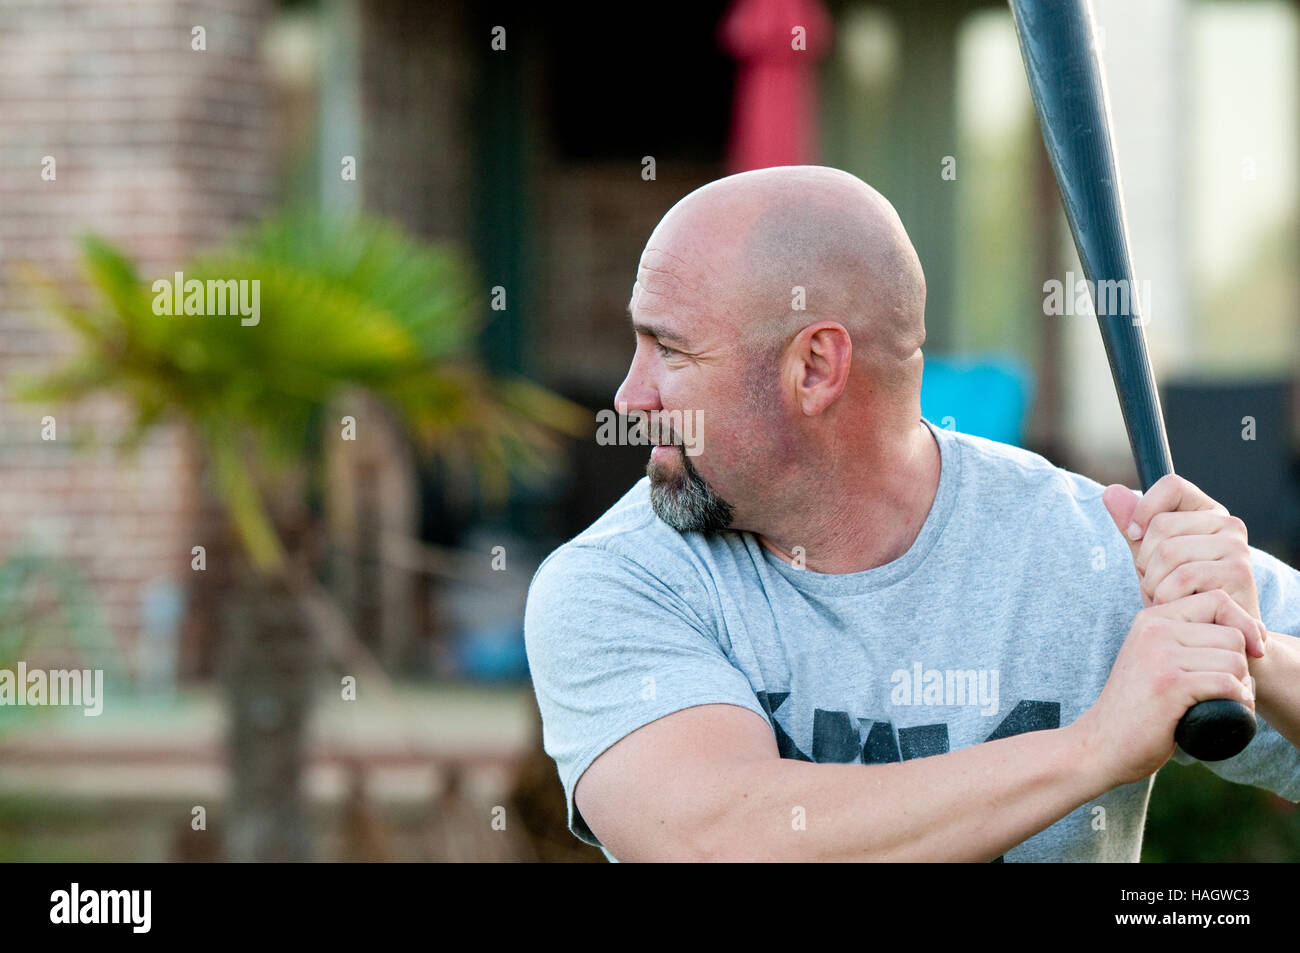 Middle-aged bald man playing holding baseball bat ready to swing. Stock Photo